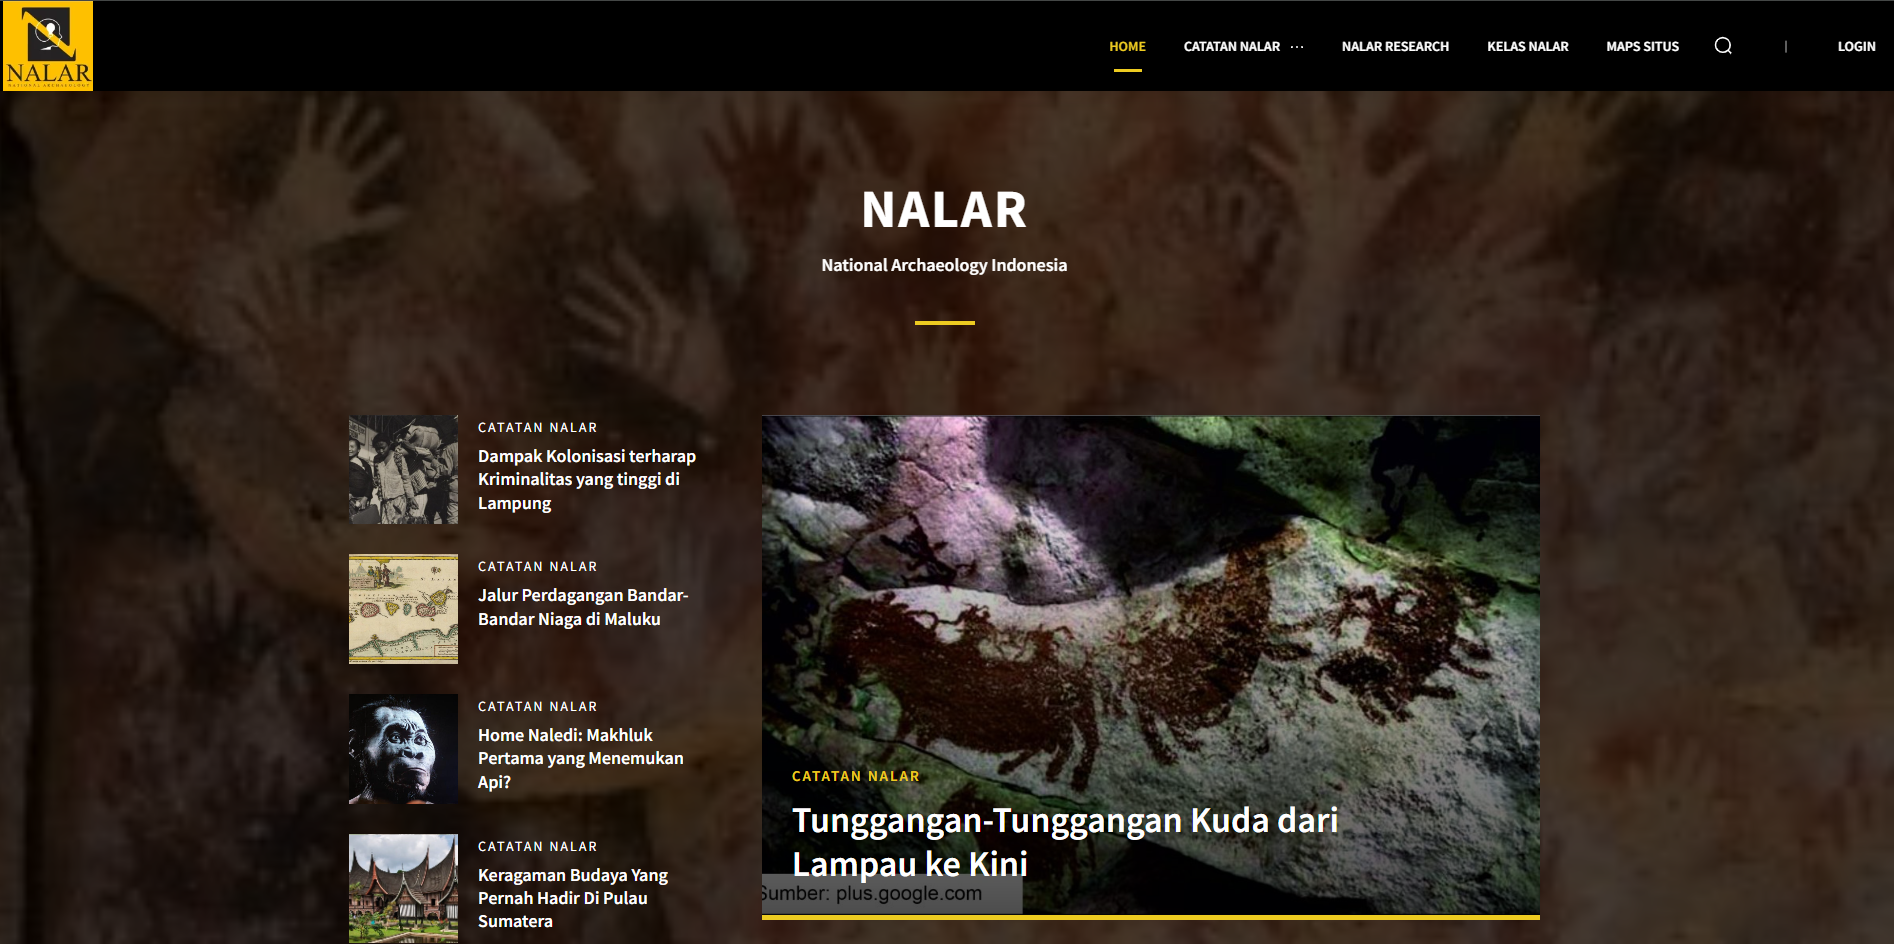 National Archaeology – NALAR